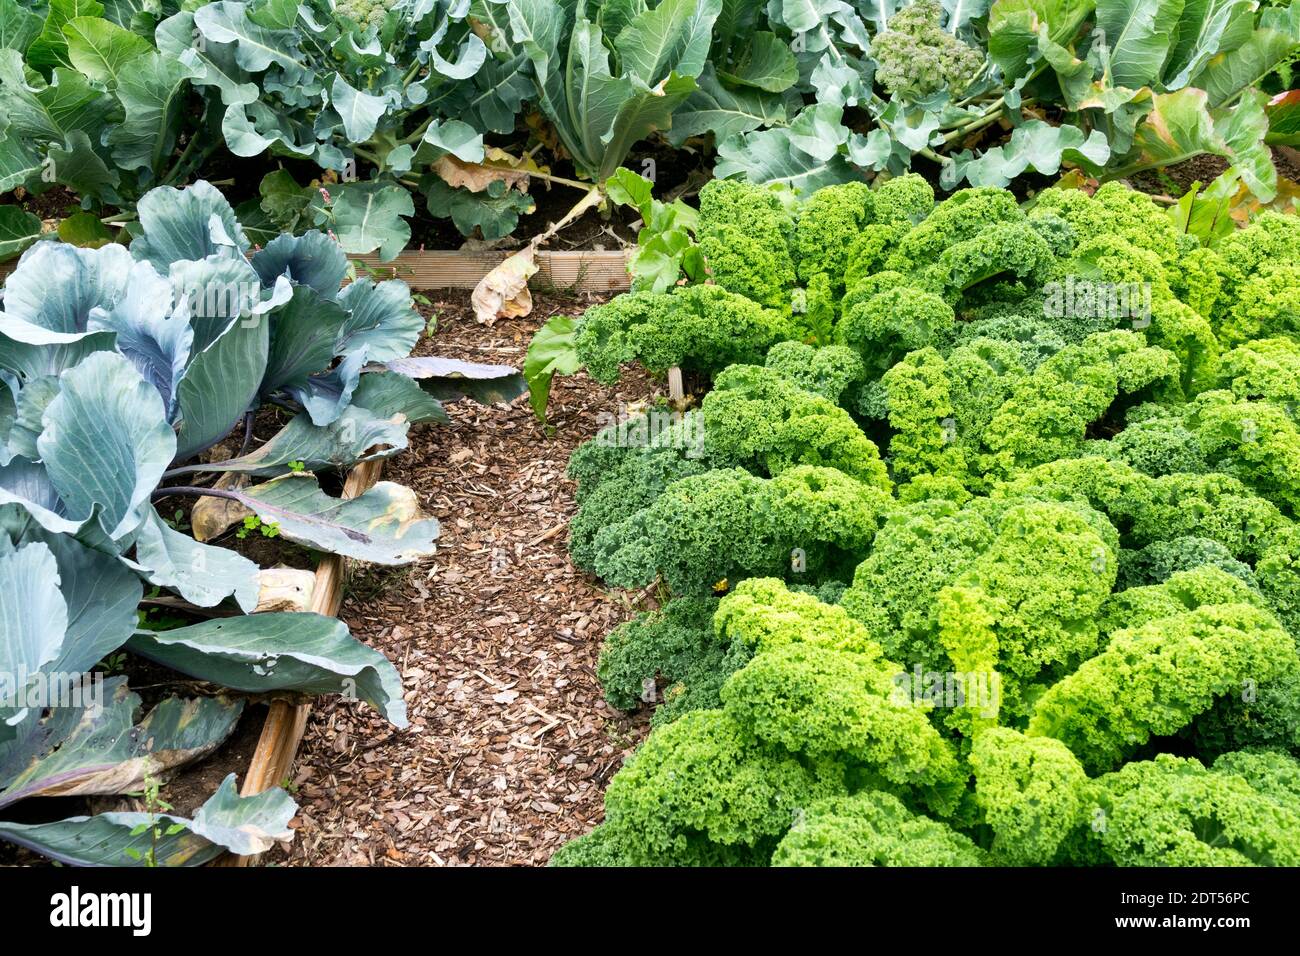 Grünkohl-Garten im Hochbeet-Gemüsegarten. Spätsommer, Hochbeete Gemüse Brassica oleracea acephala Grünkohl Gartenbau, Gartenbau Stockfoto